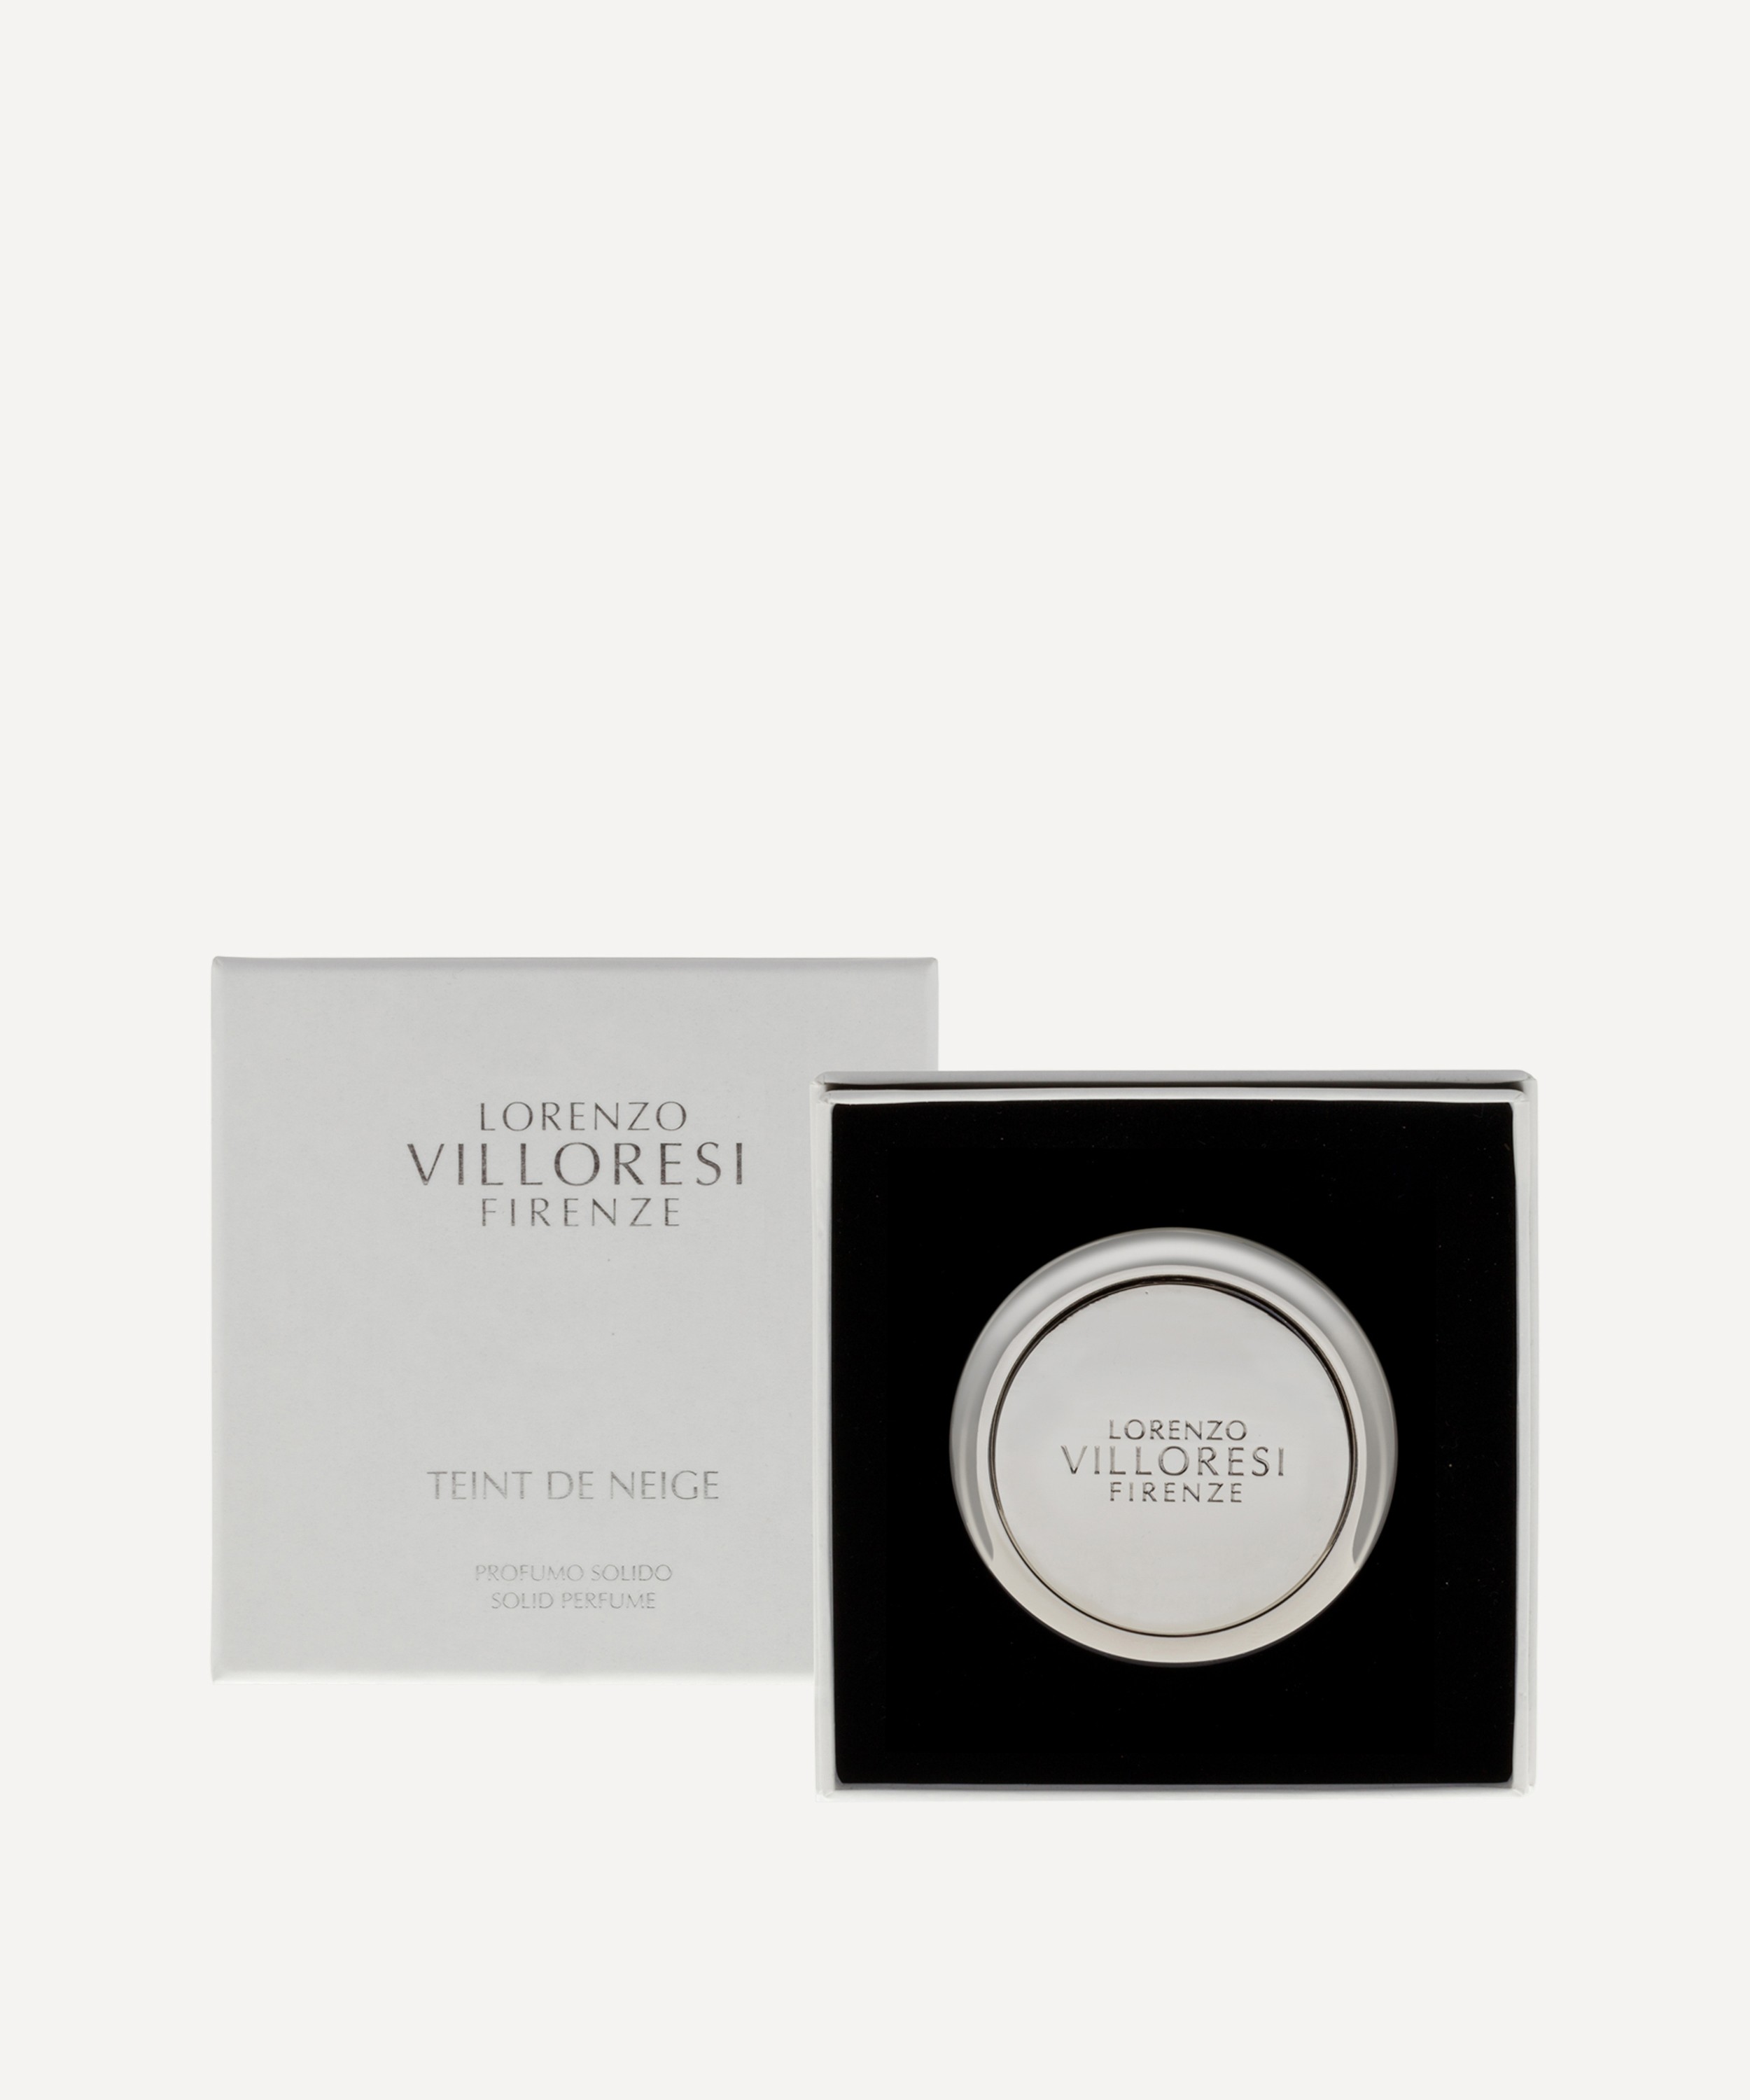 Lorenzo Villoresi - Teint de Neige Solid Perfume 10g